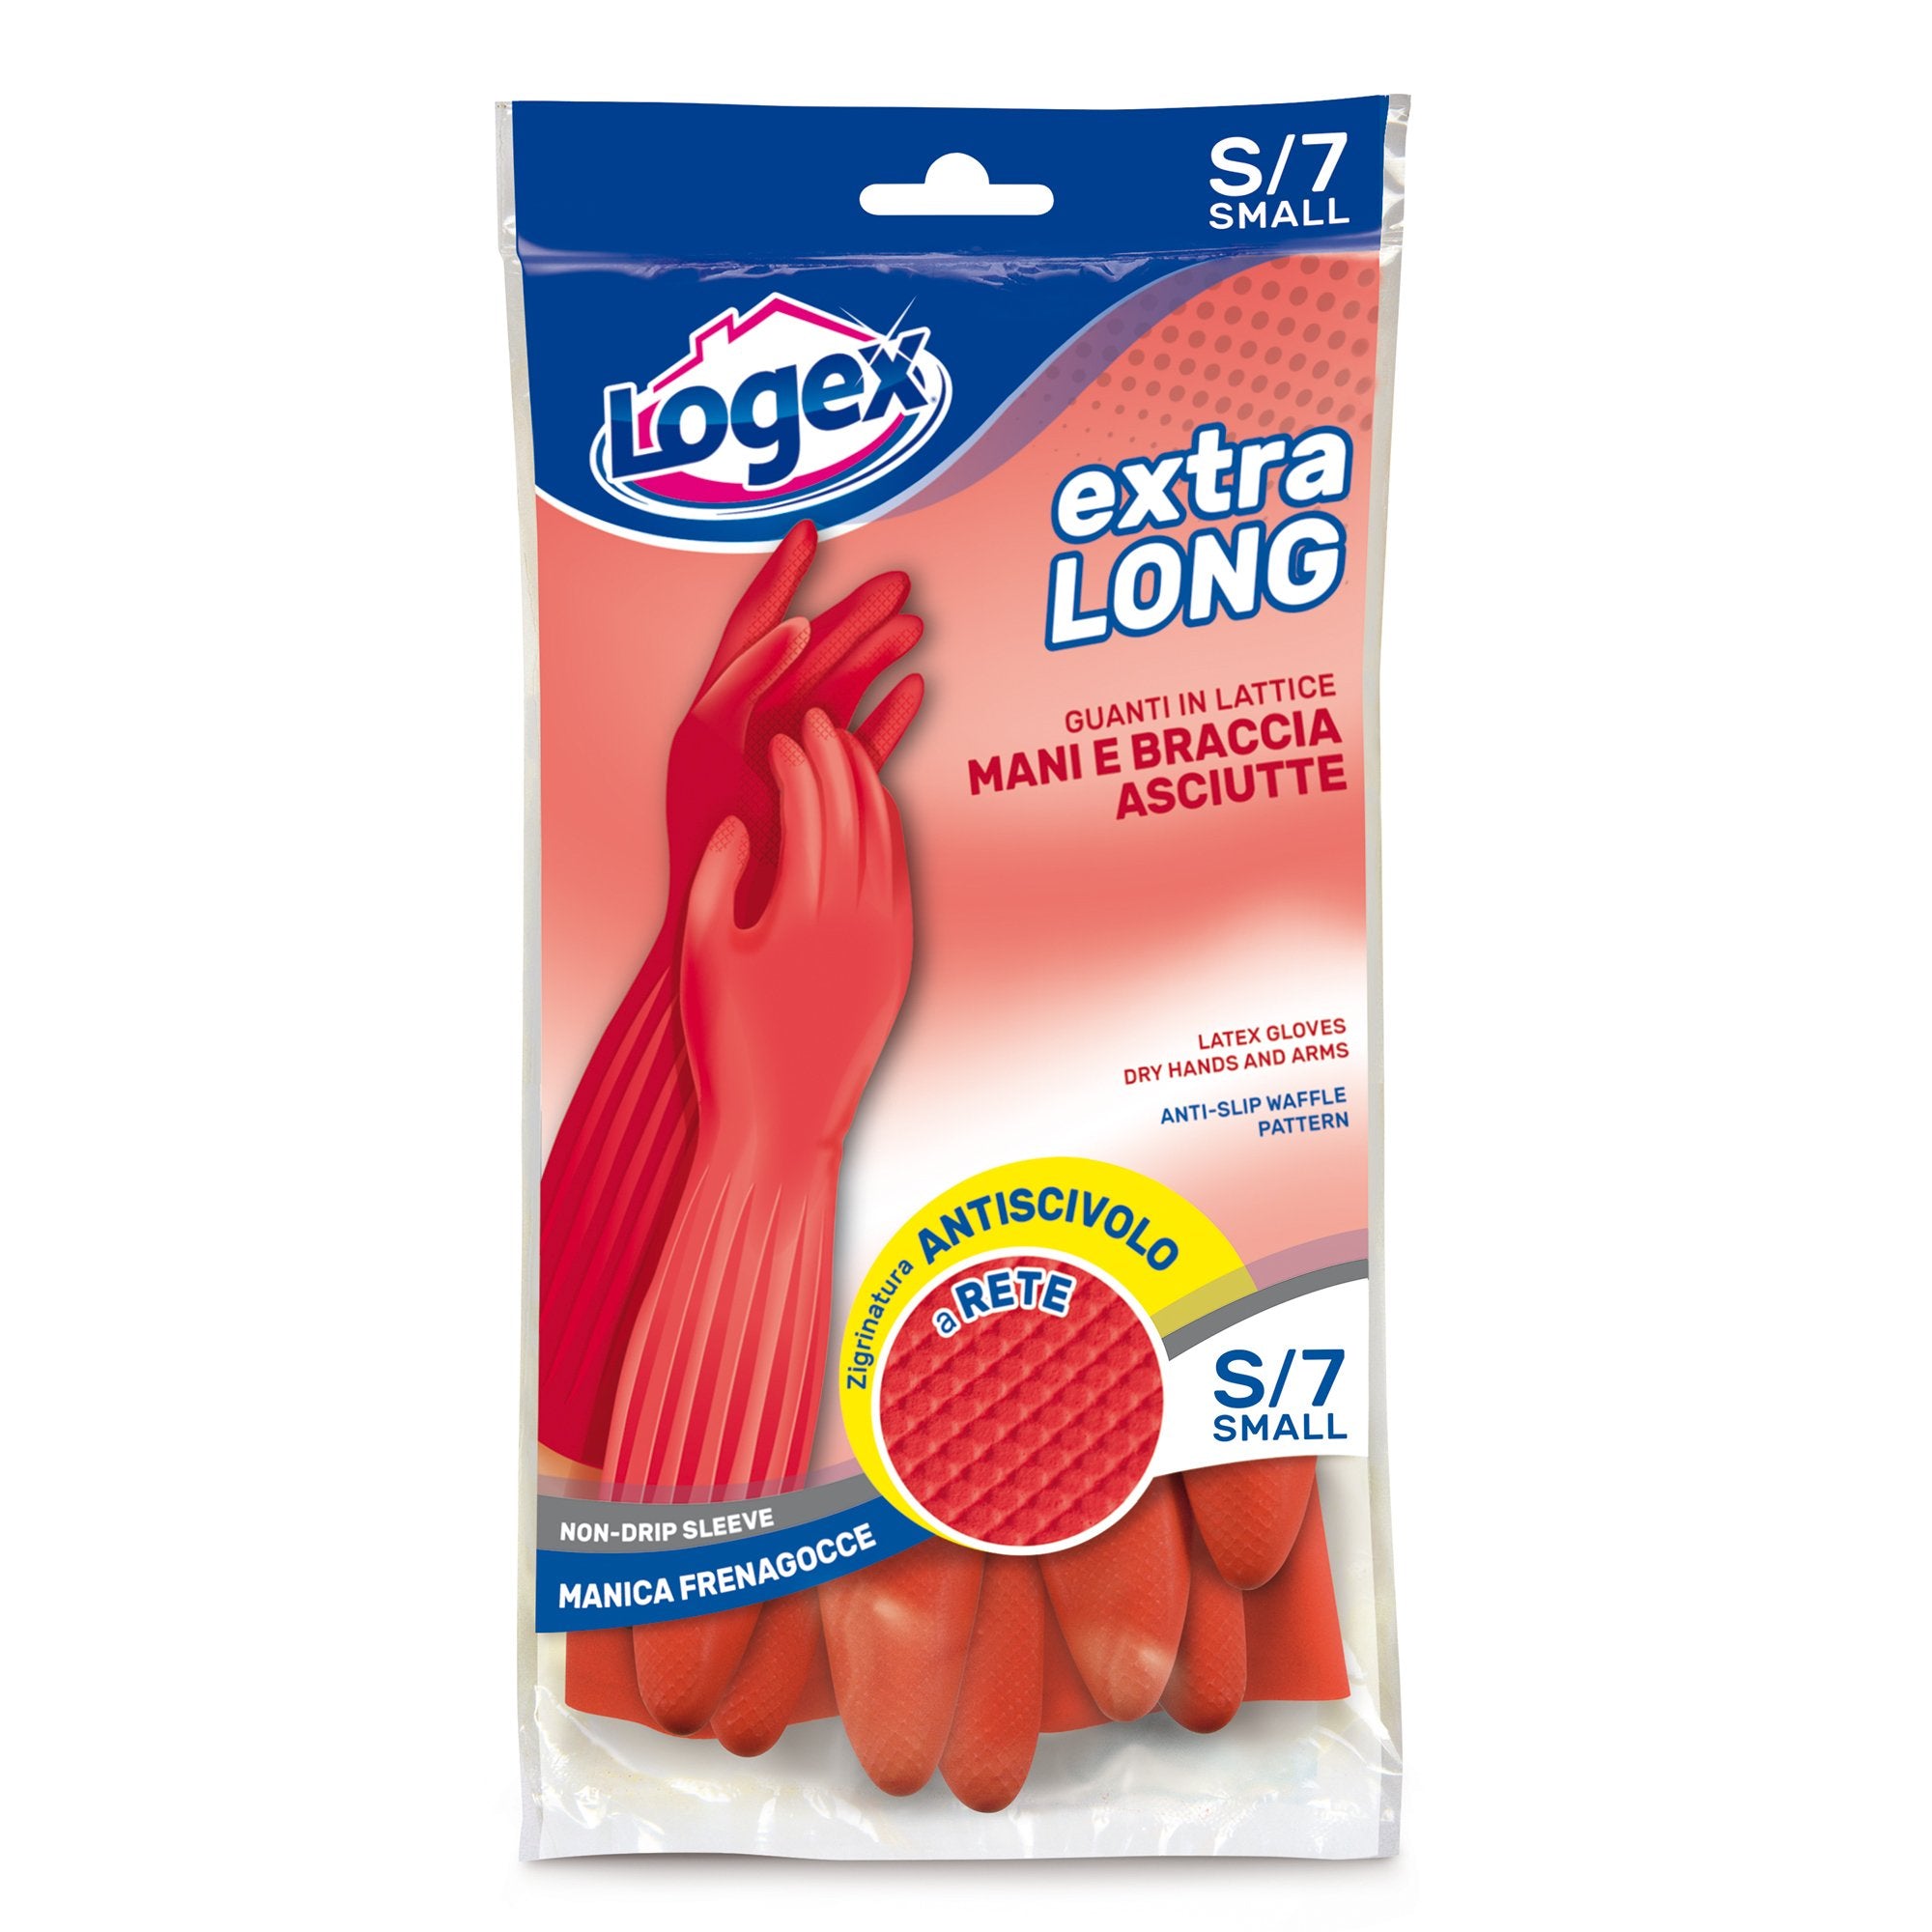 logex-professional-guanti-lattice-extralong-tg-s-rosso